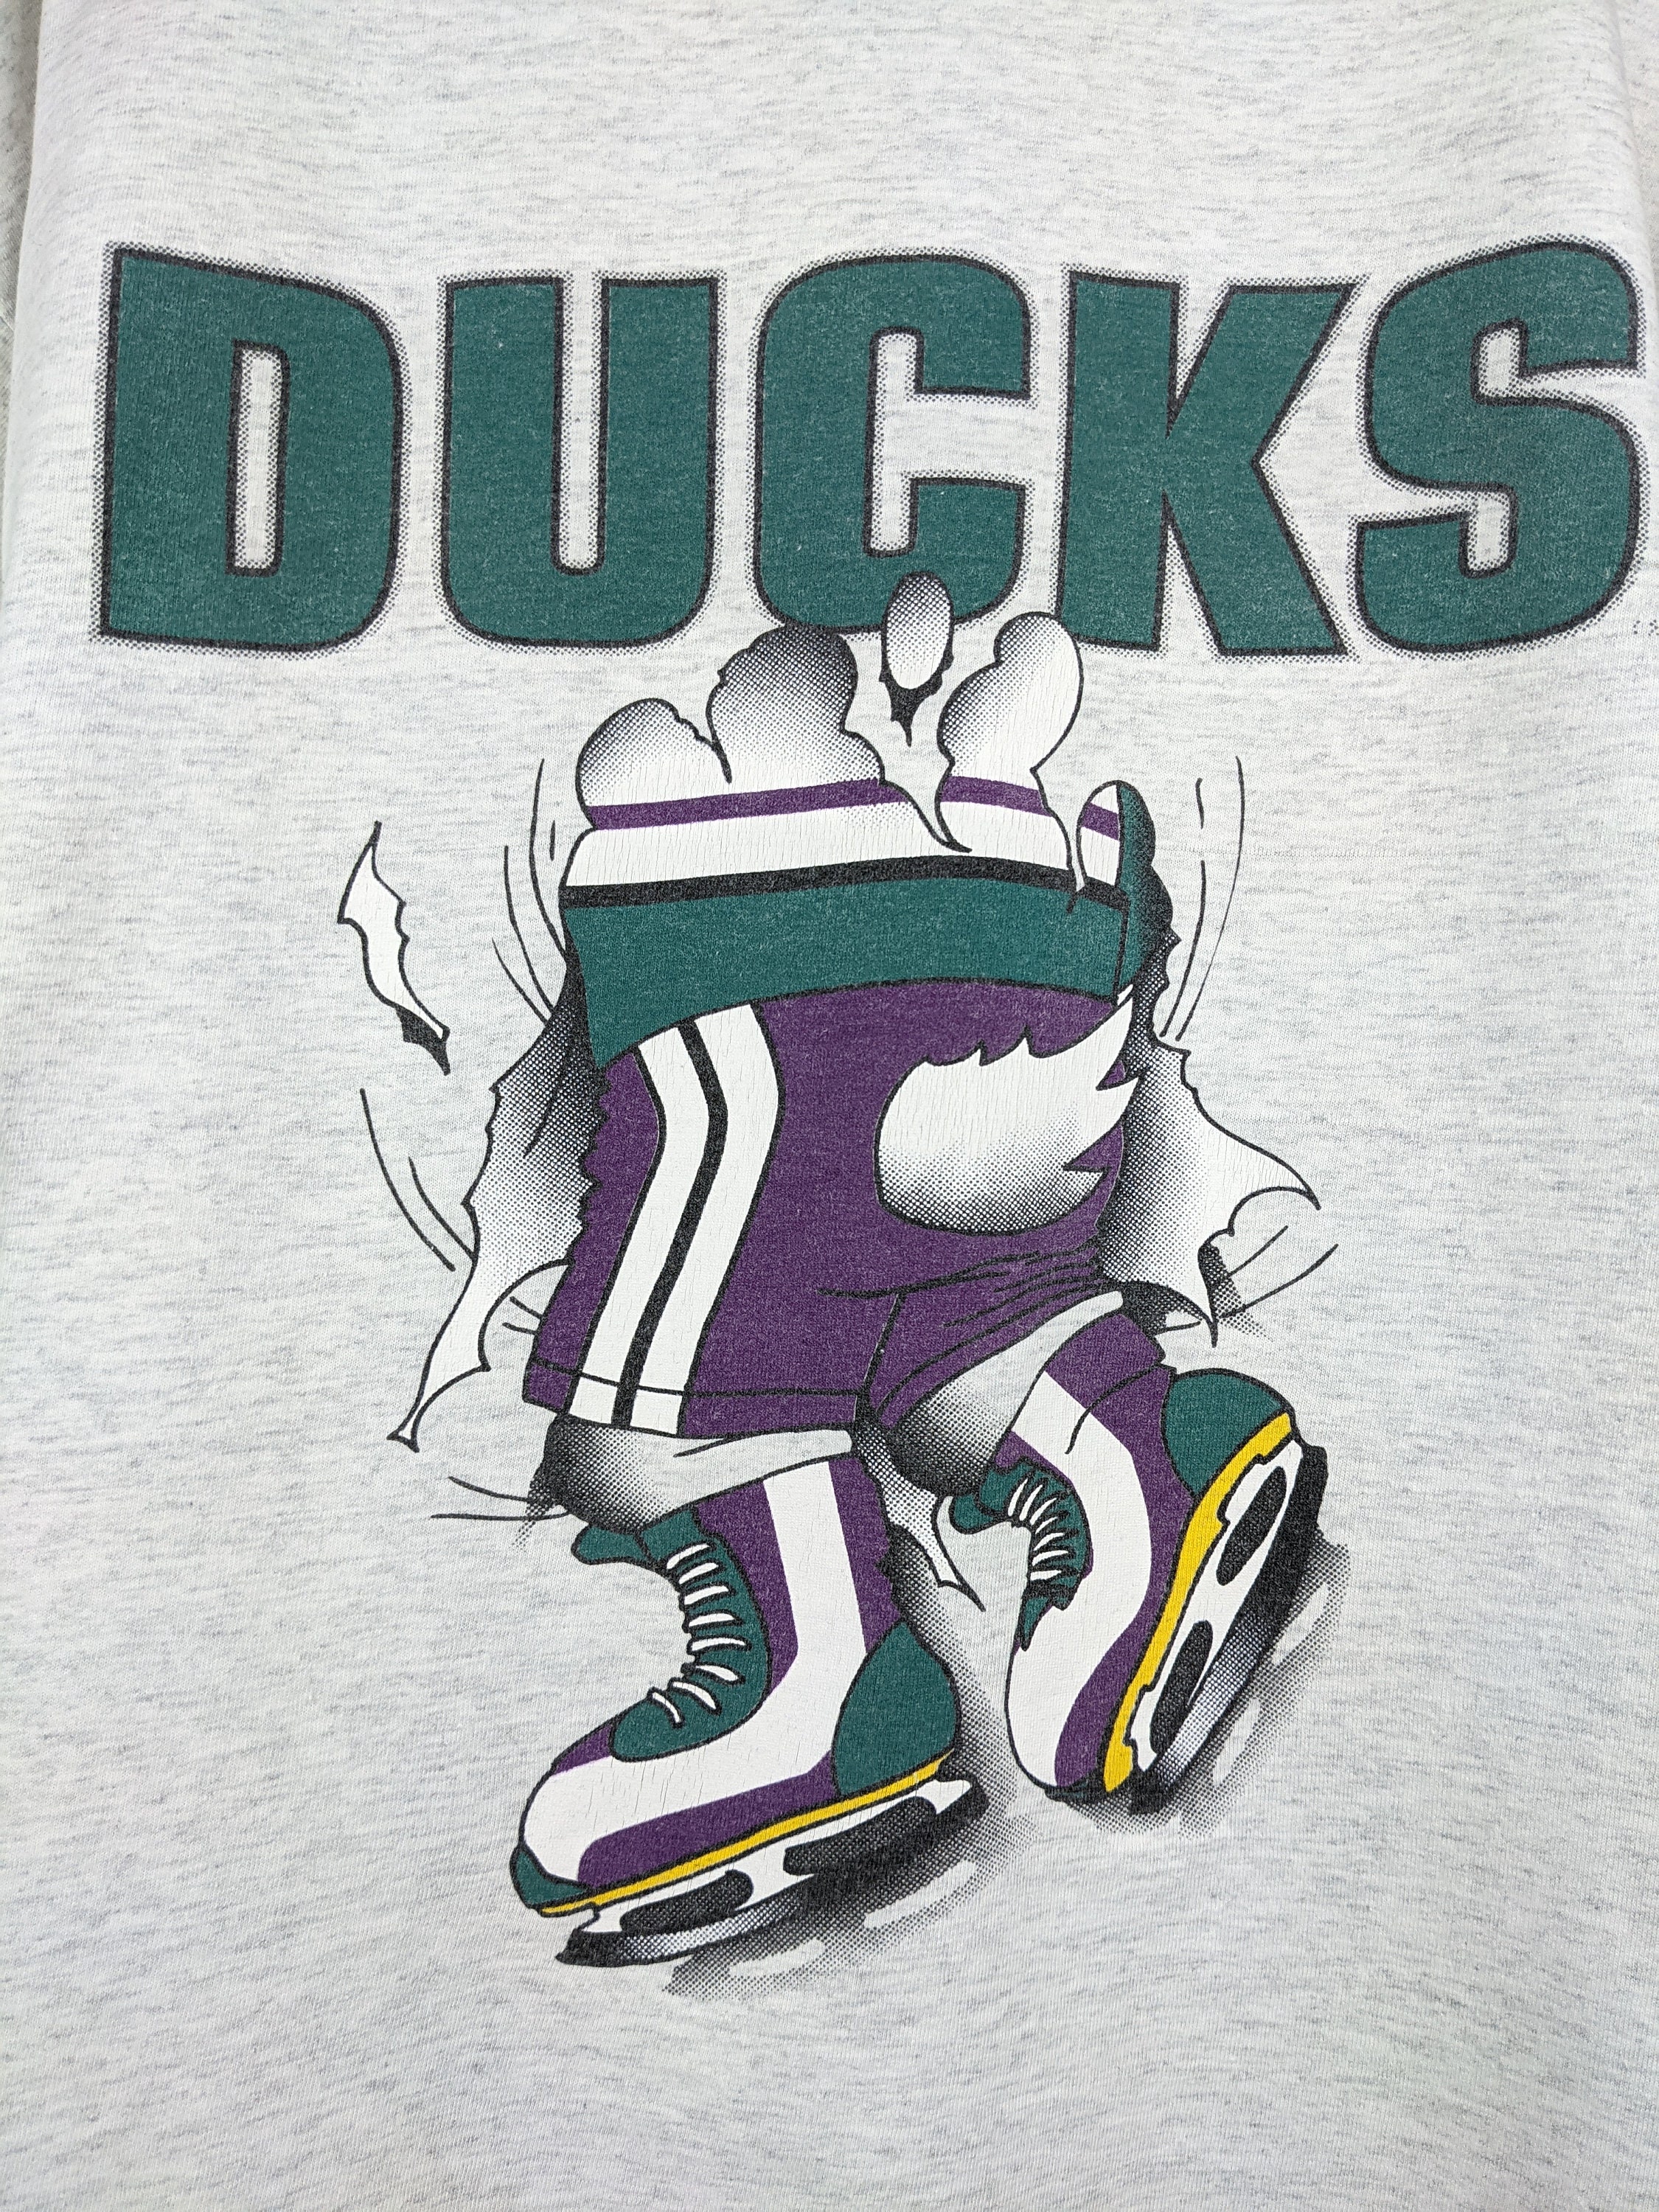 Printify Anaheim Ducks Orange County 90's Vintage NHL Crewneck Sweatshirt L / Ash